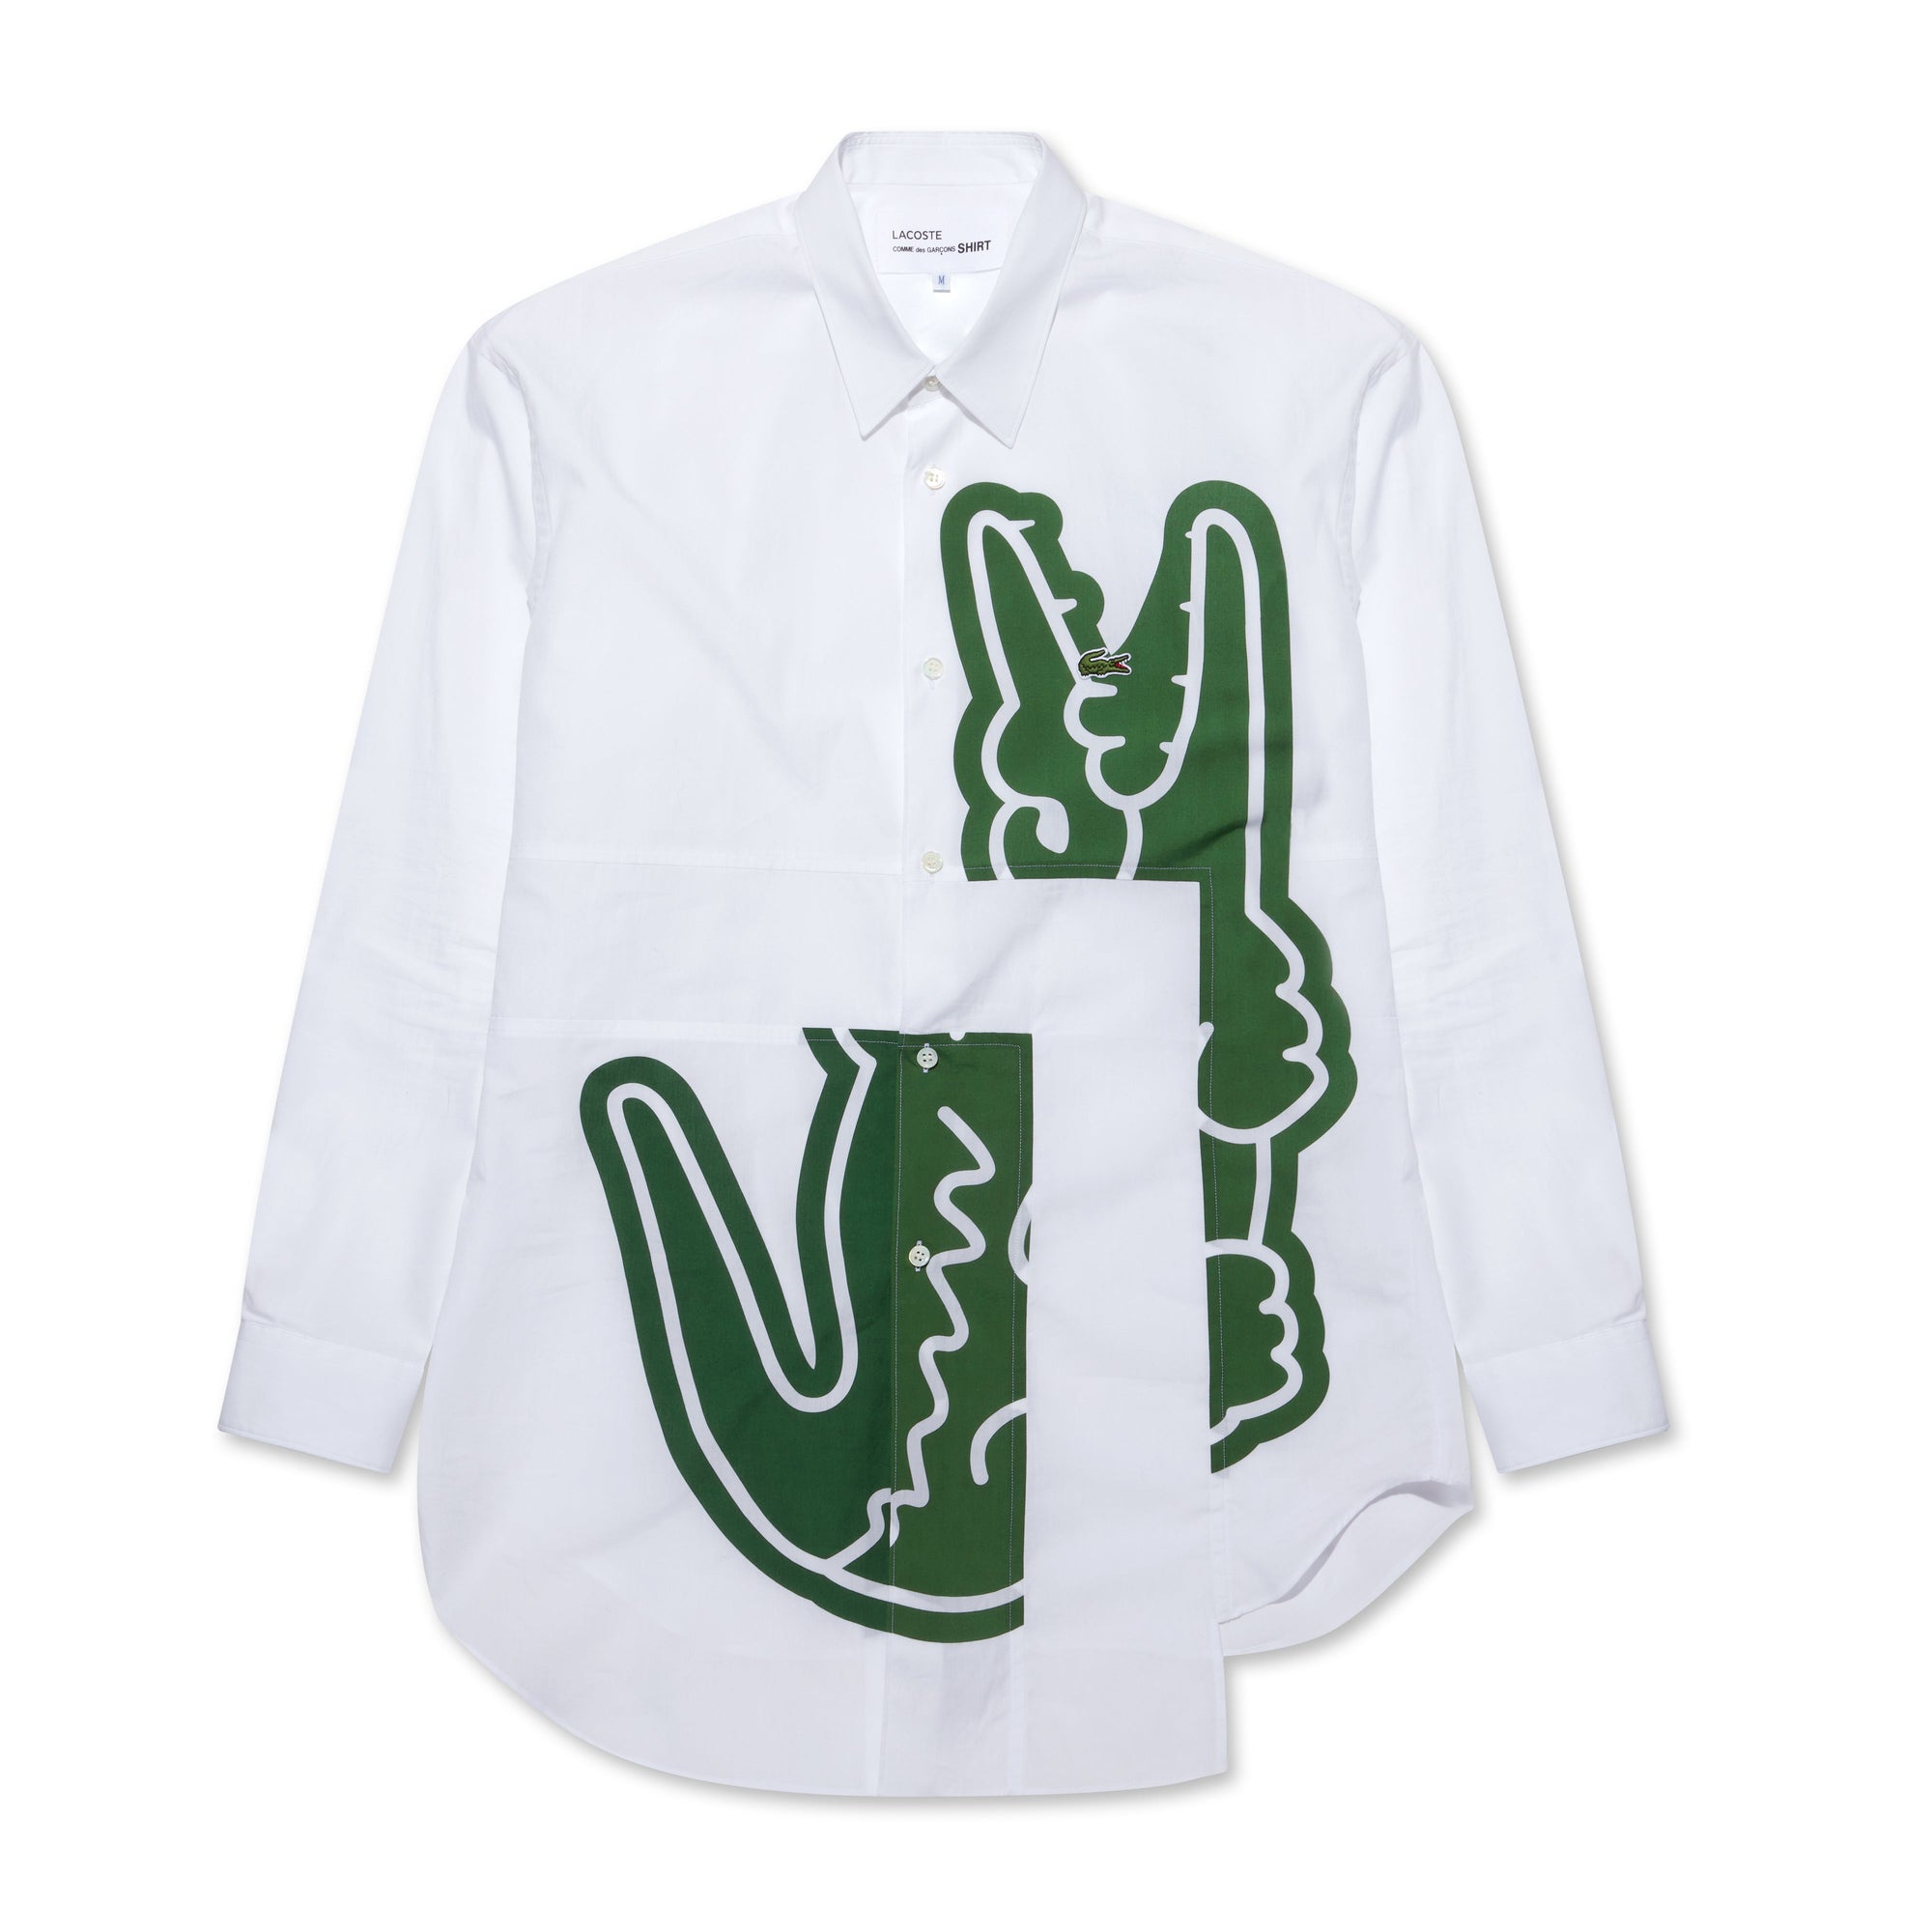 CDG Shirt - Lacoste Men's Shirt - (White) view 1